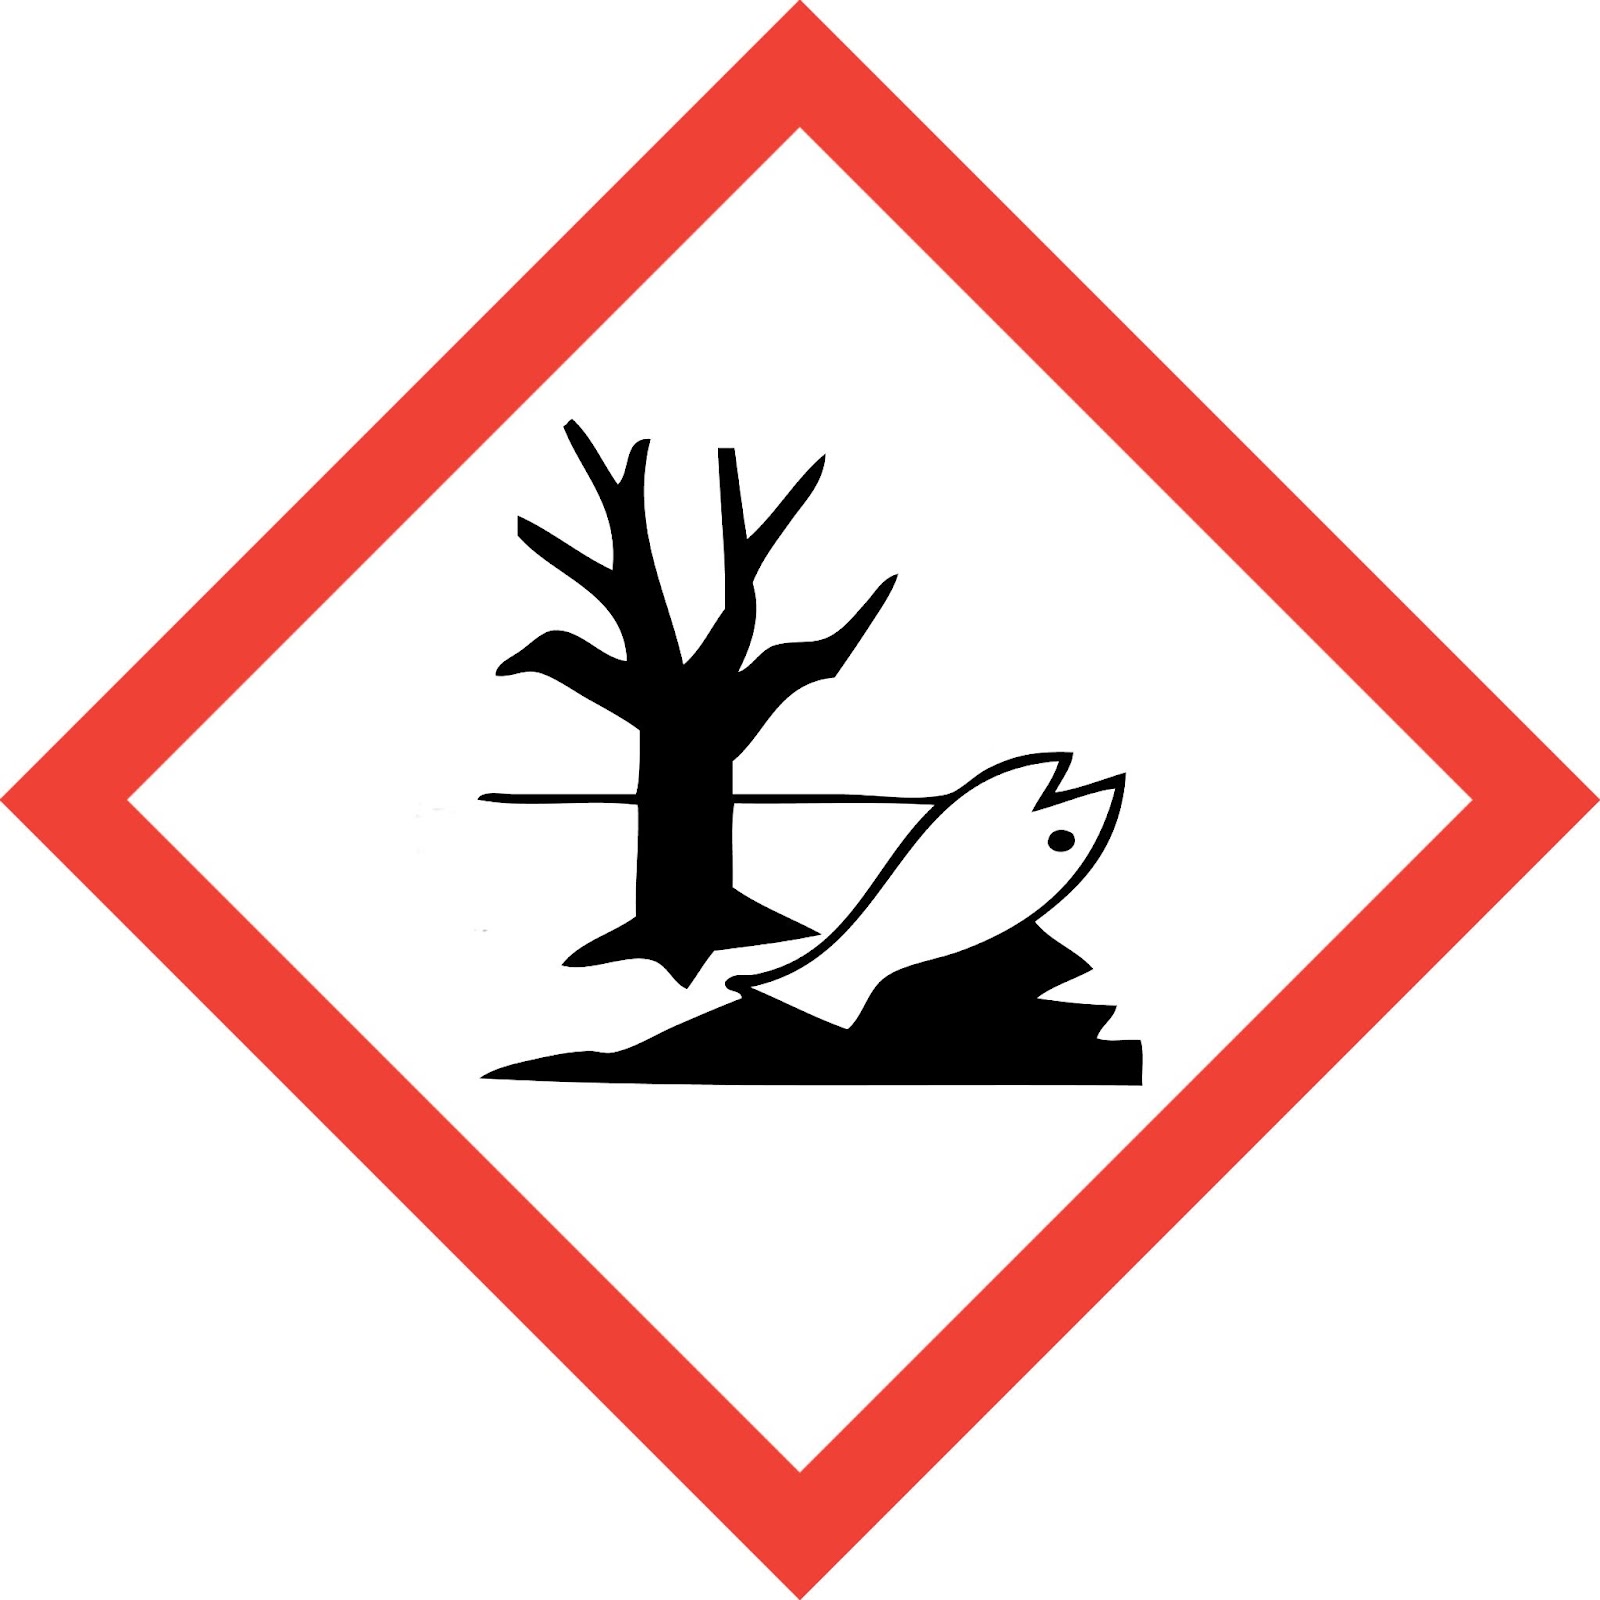 lab safety symbols